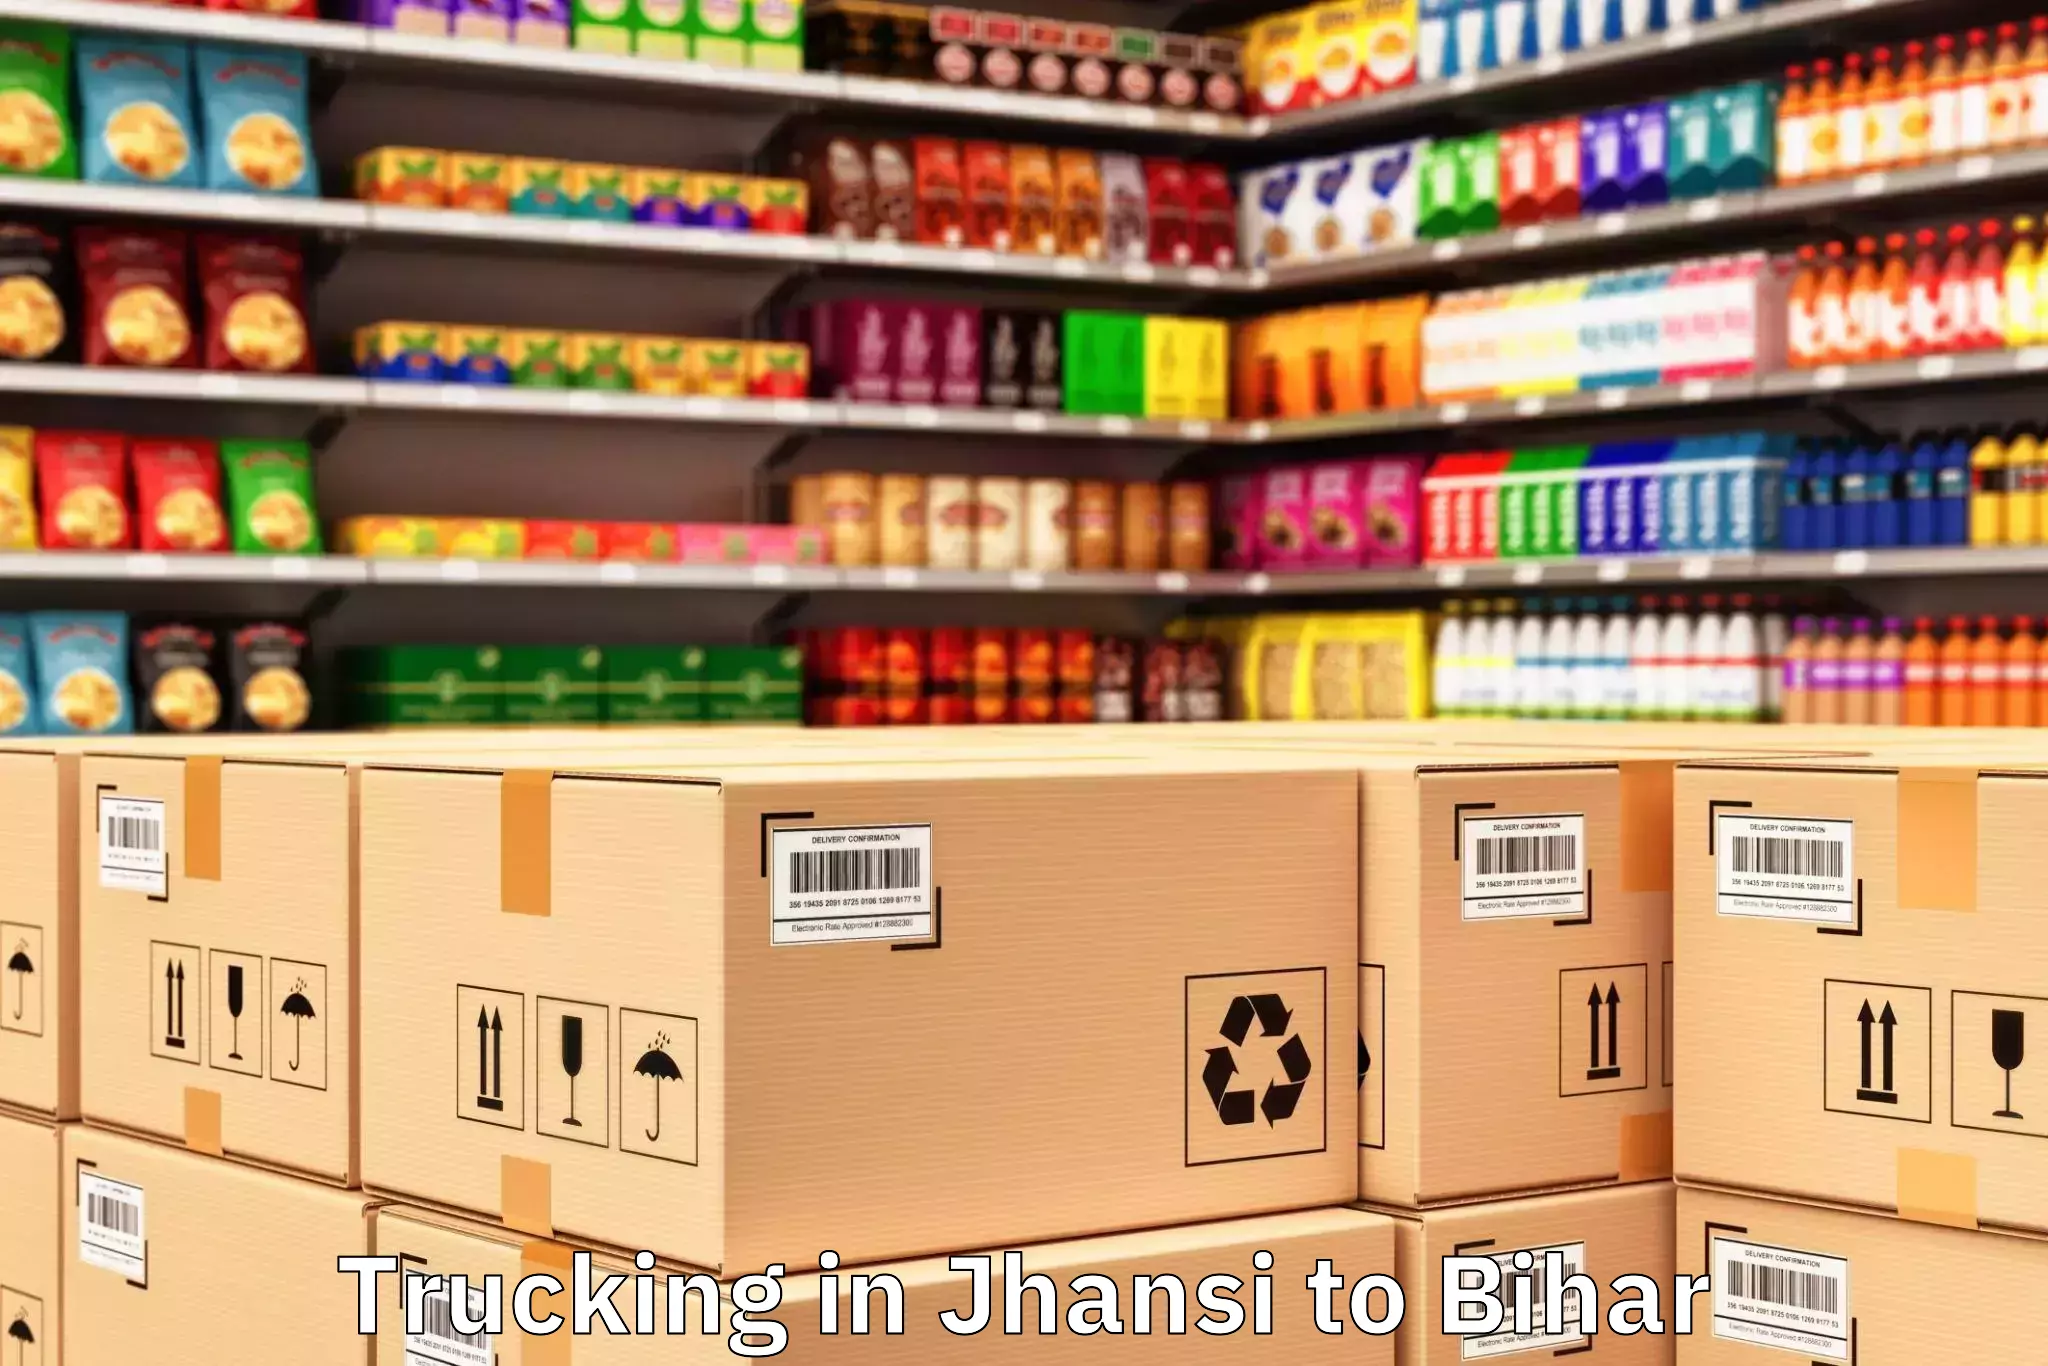 Jhansi to Bathani Trucking